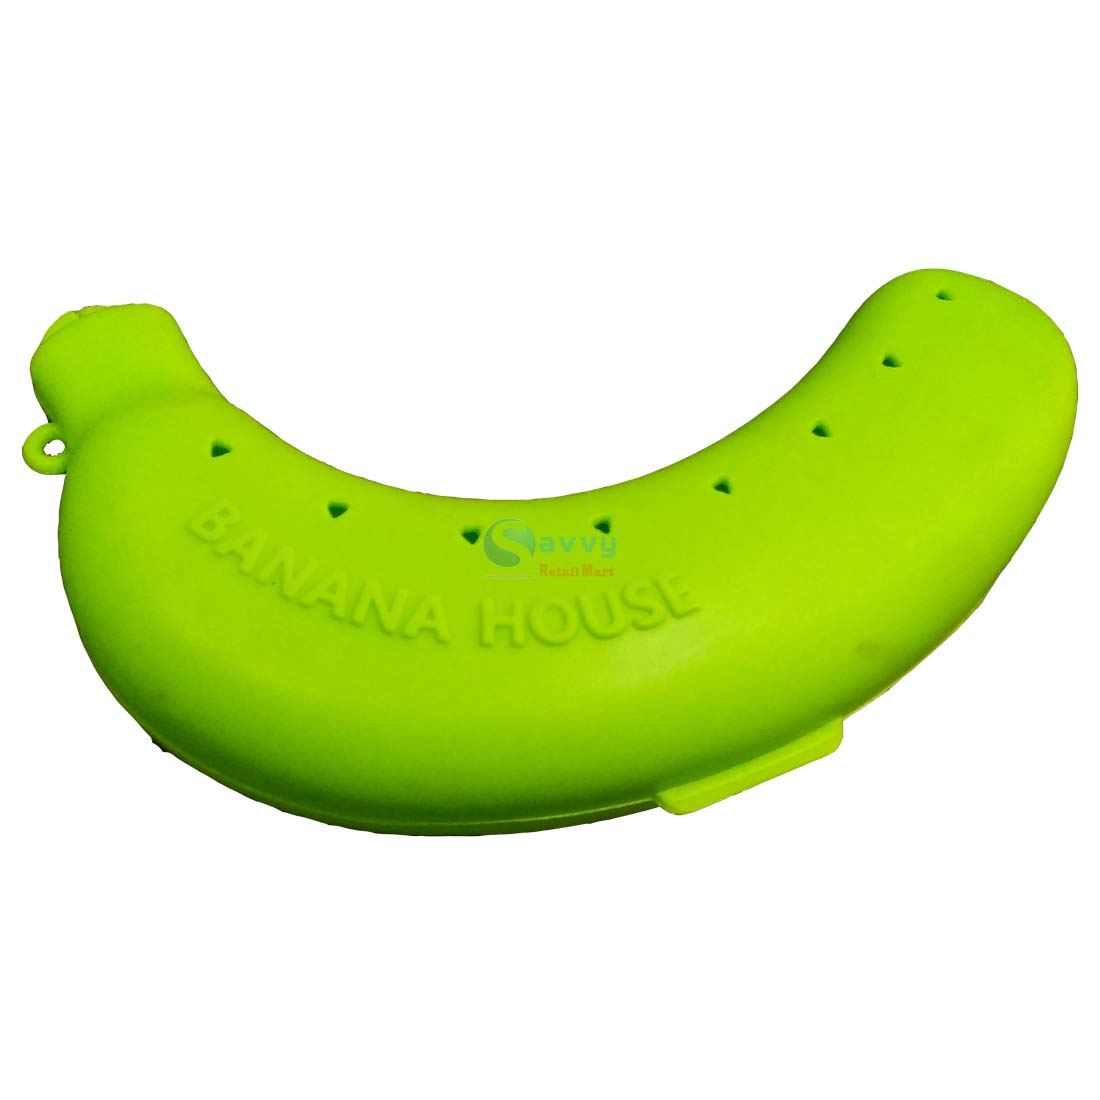 Banana Case SRO5107 - Green